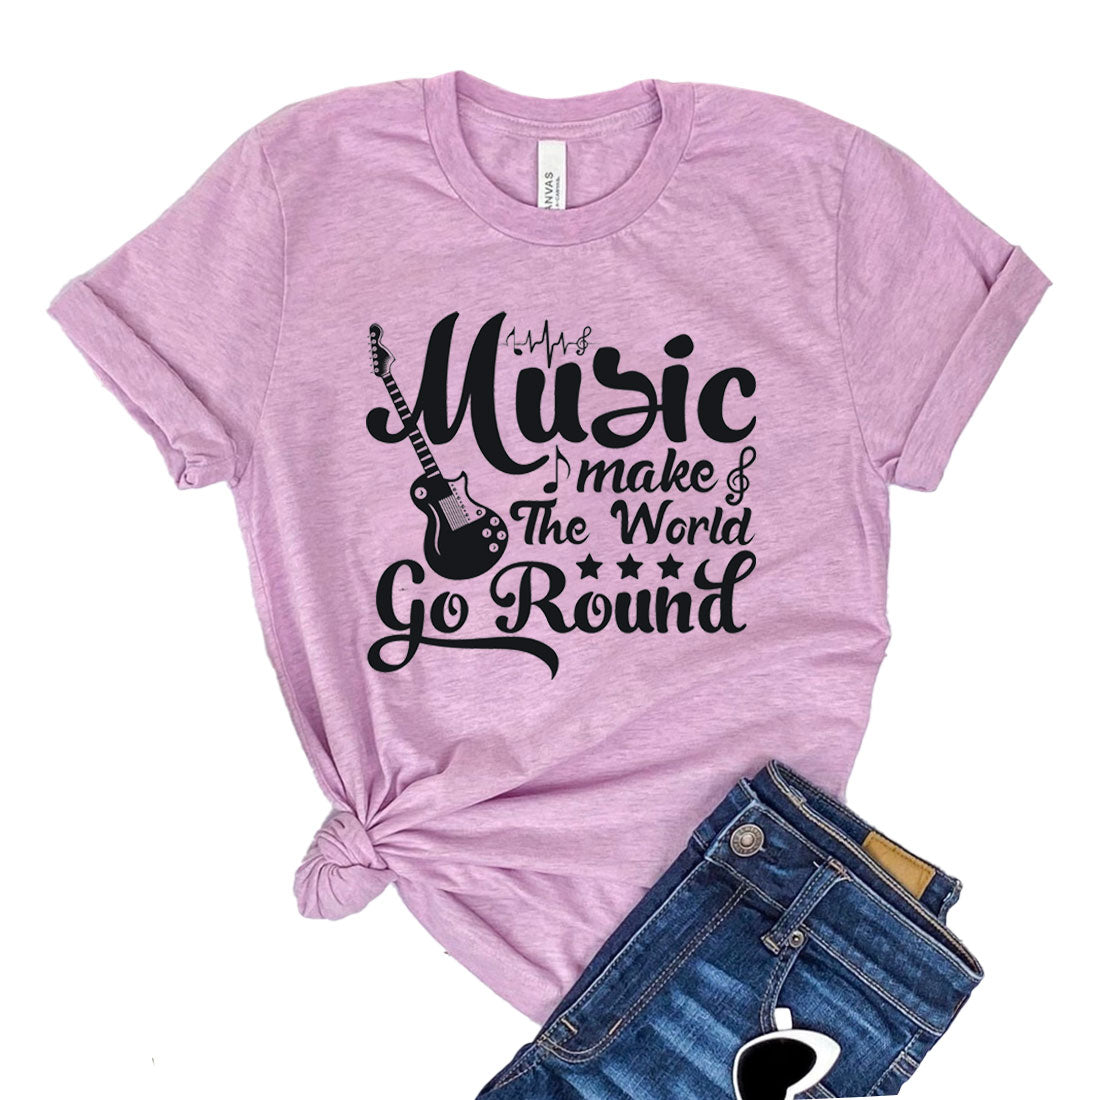 Music Makes The World Go Round Shirt Angelwarriorfitness.com